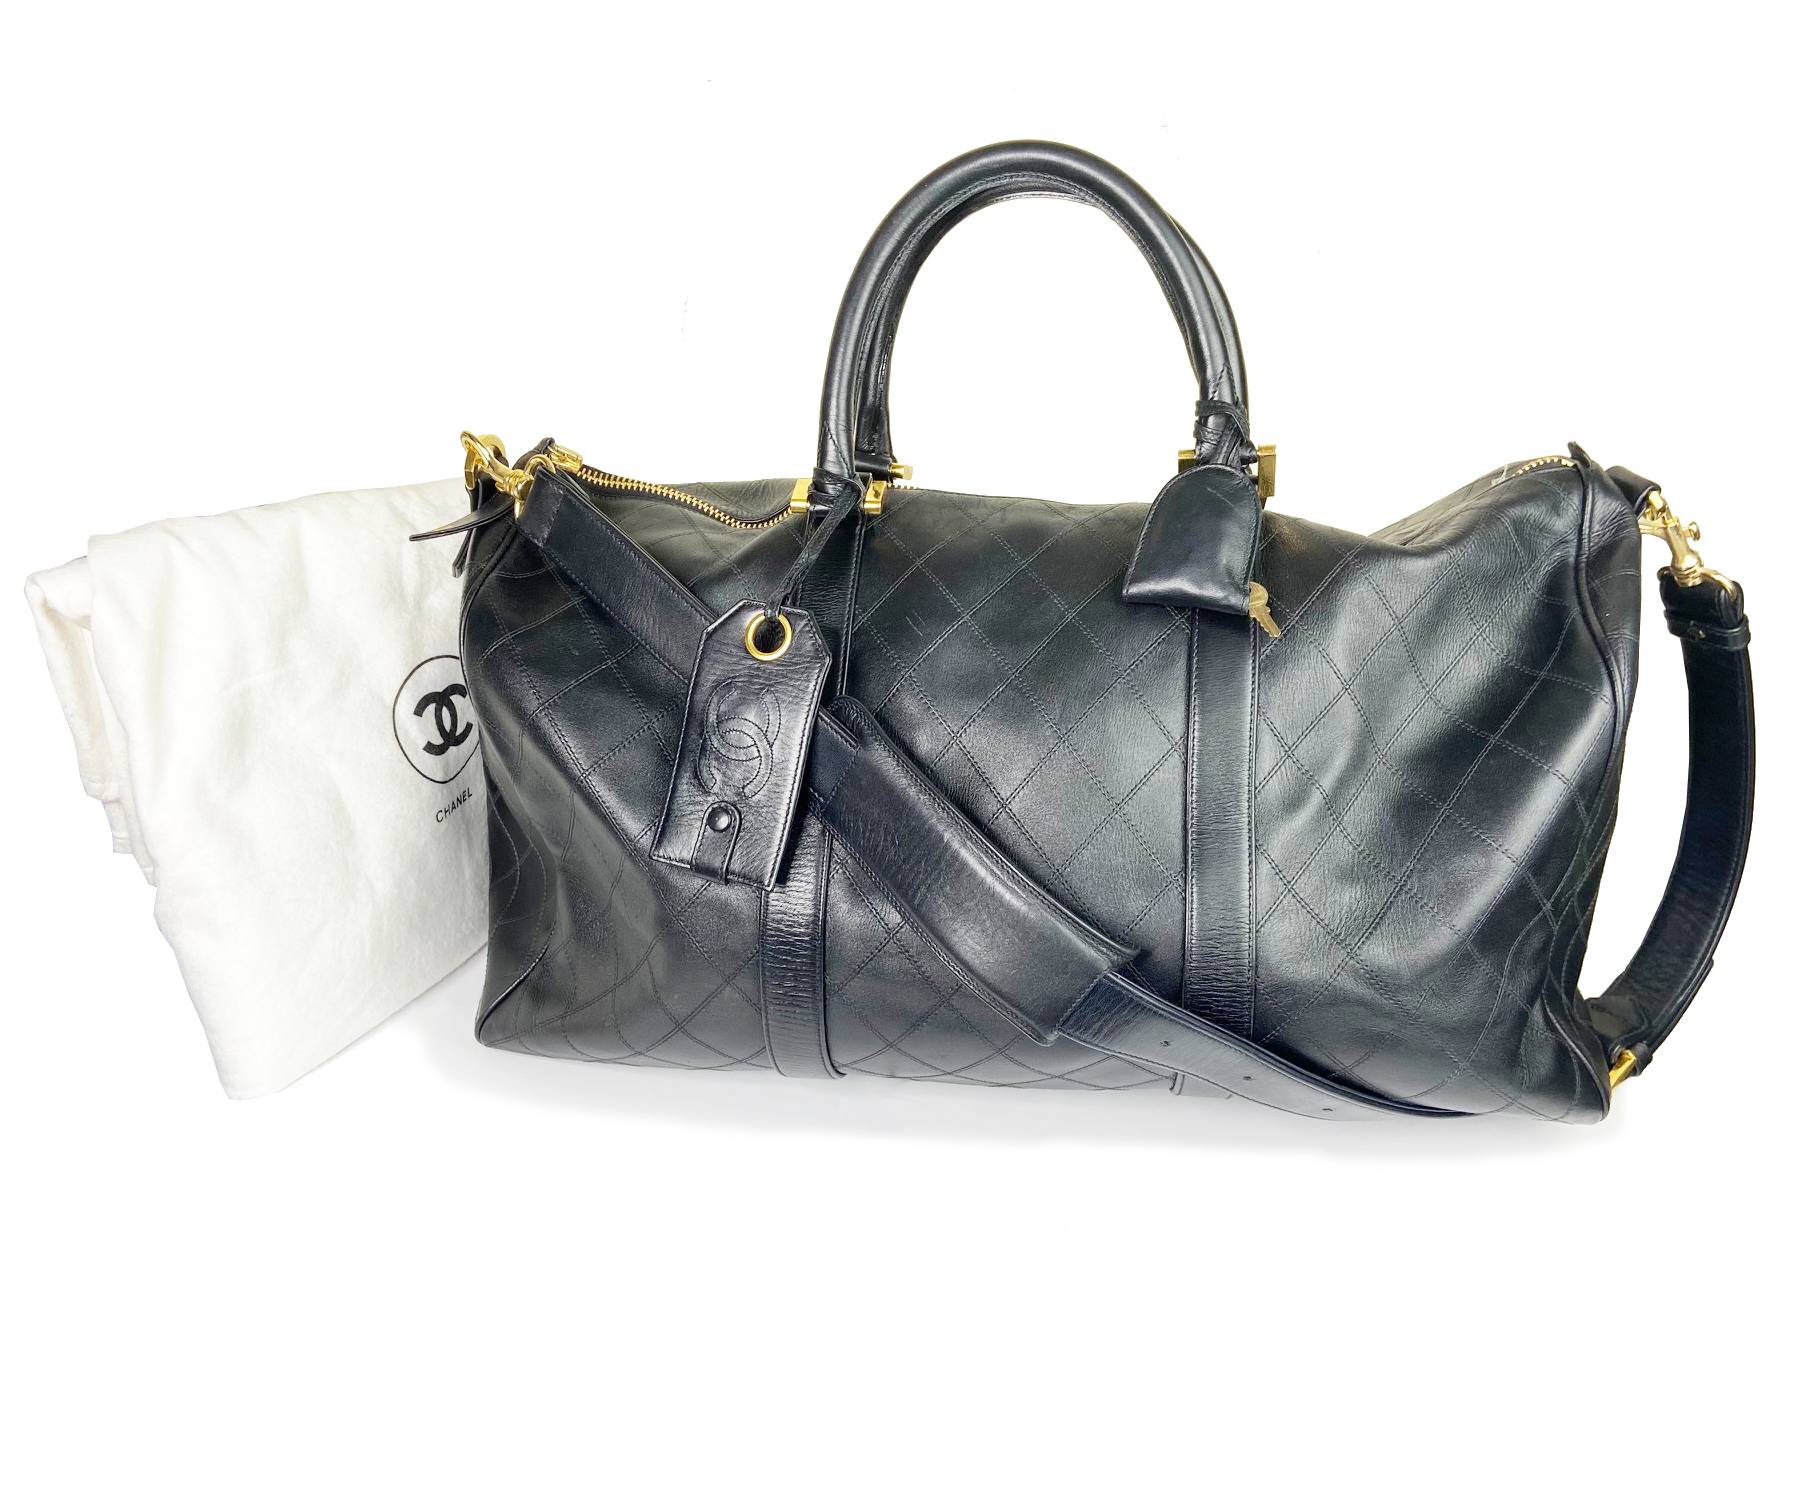 Chanel Duffel Black Travel Bag - LAR Vintage